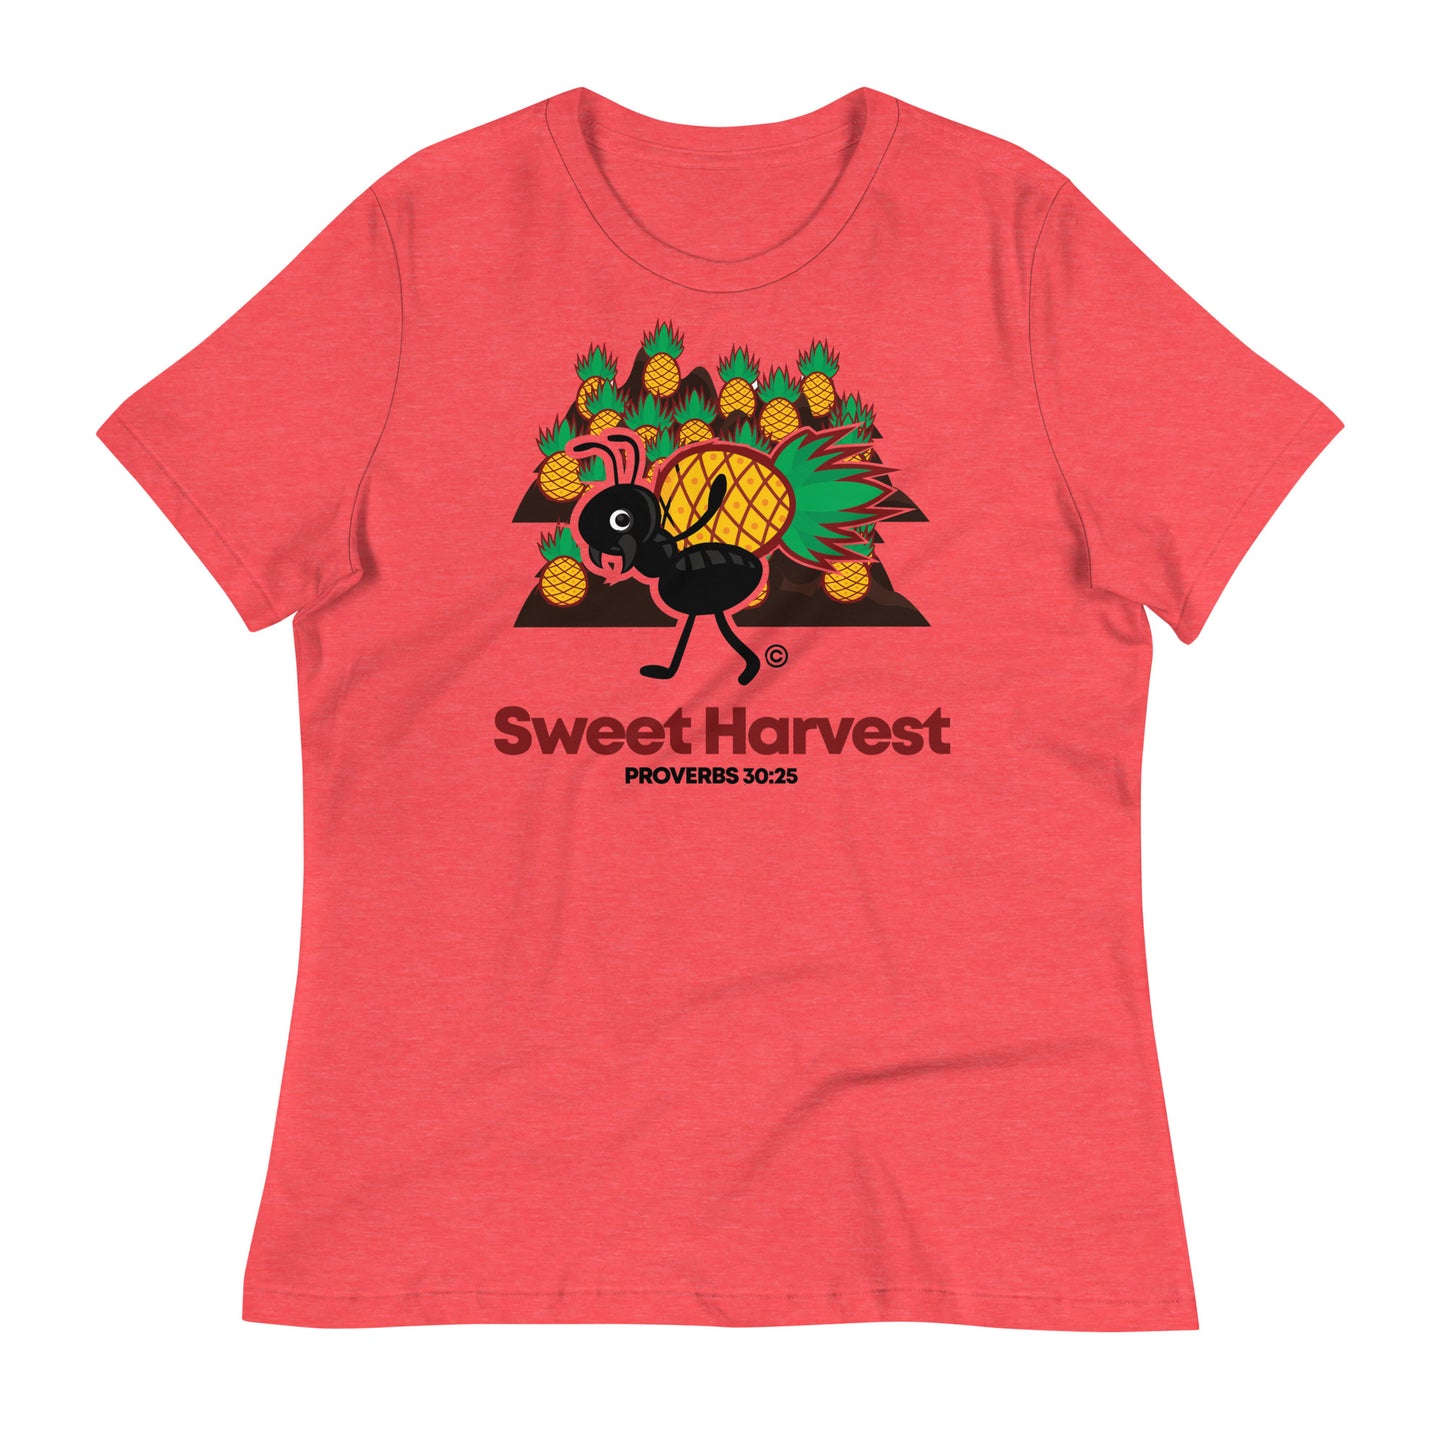 Sweet Harvest Women's Relaxed T-Shirt